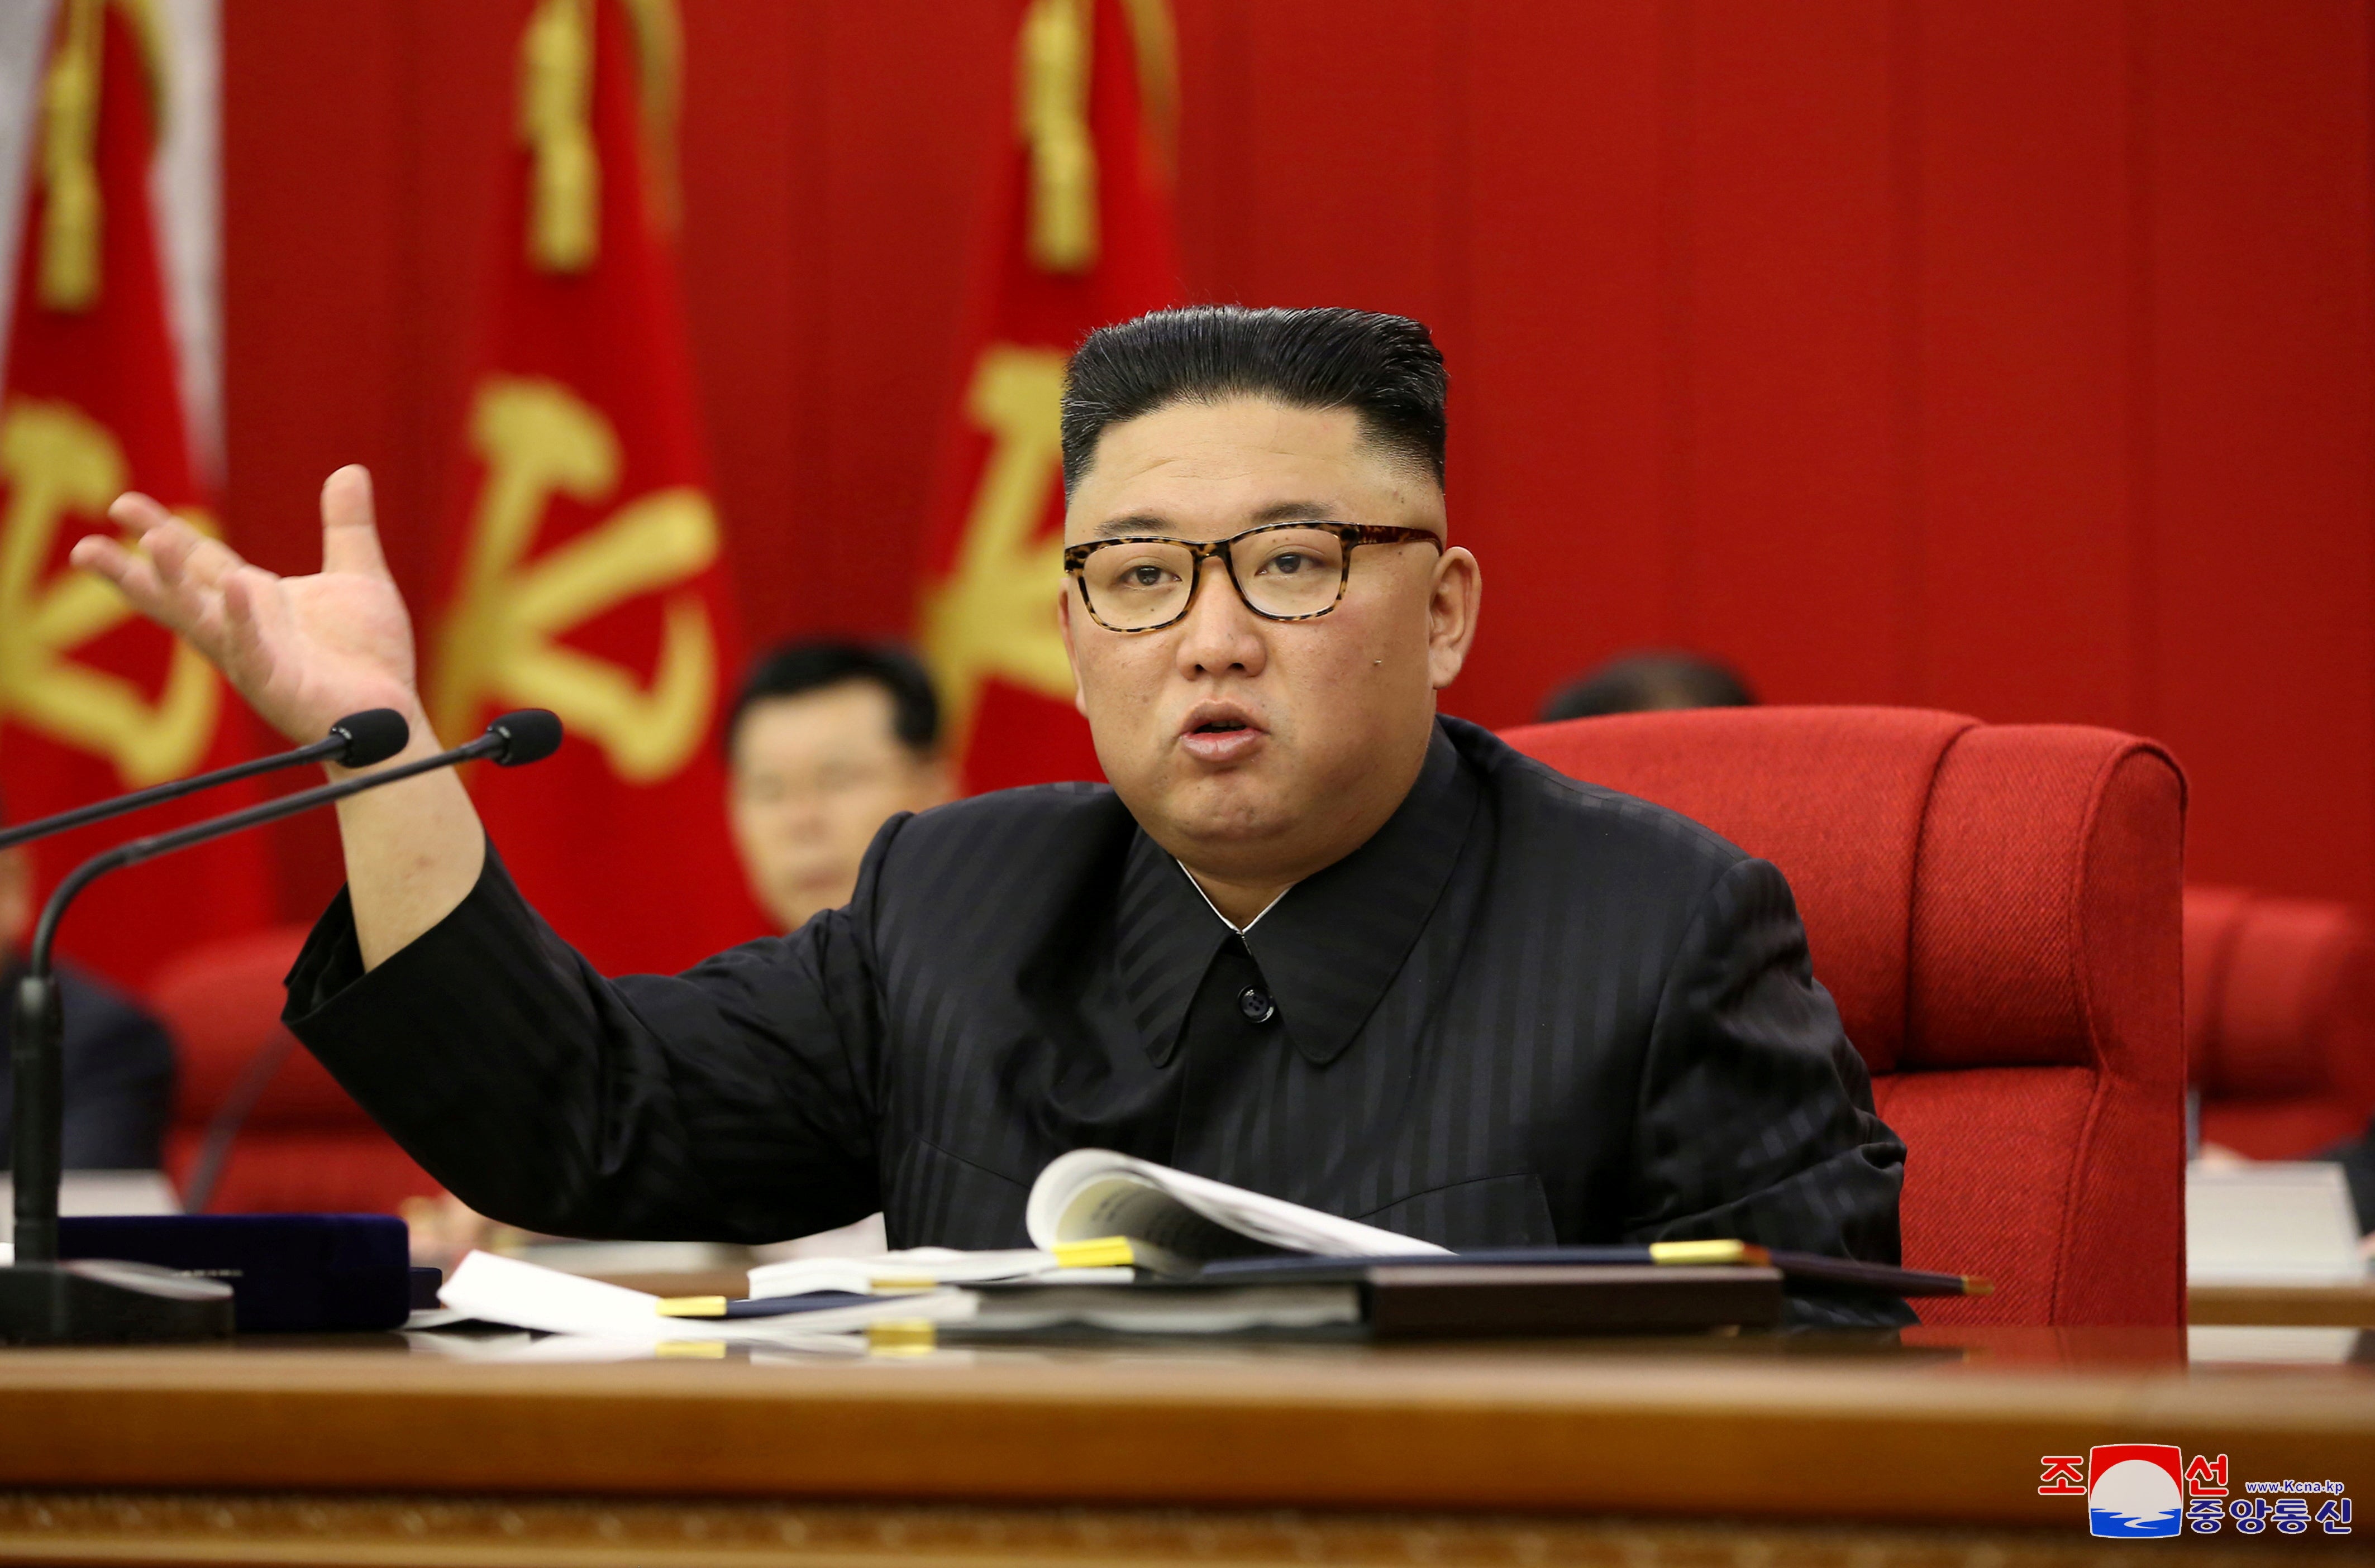 File image: North Korean leader Kim Jong Un